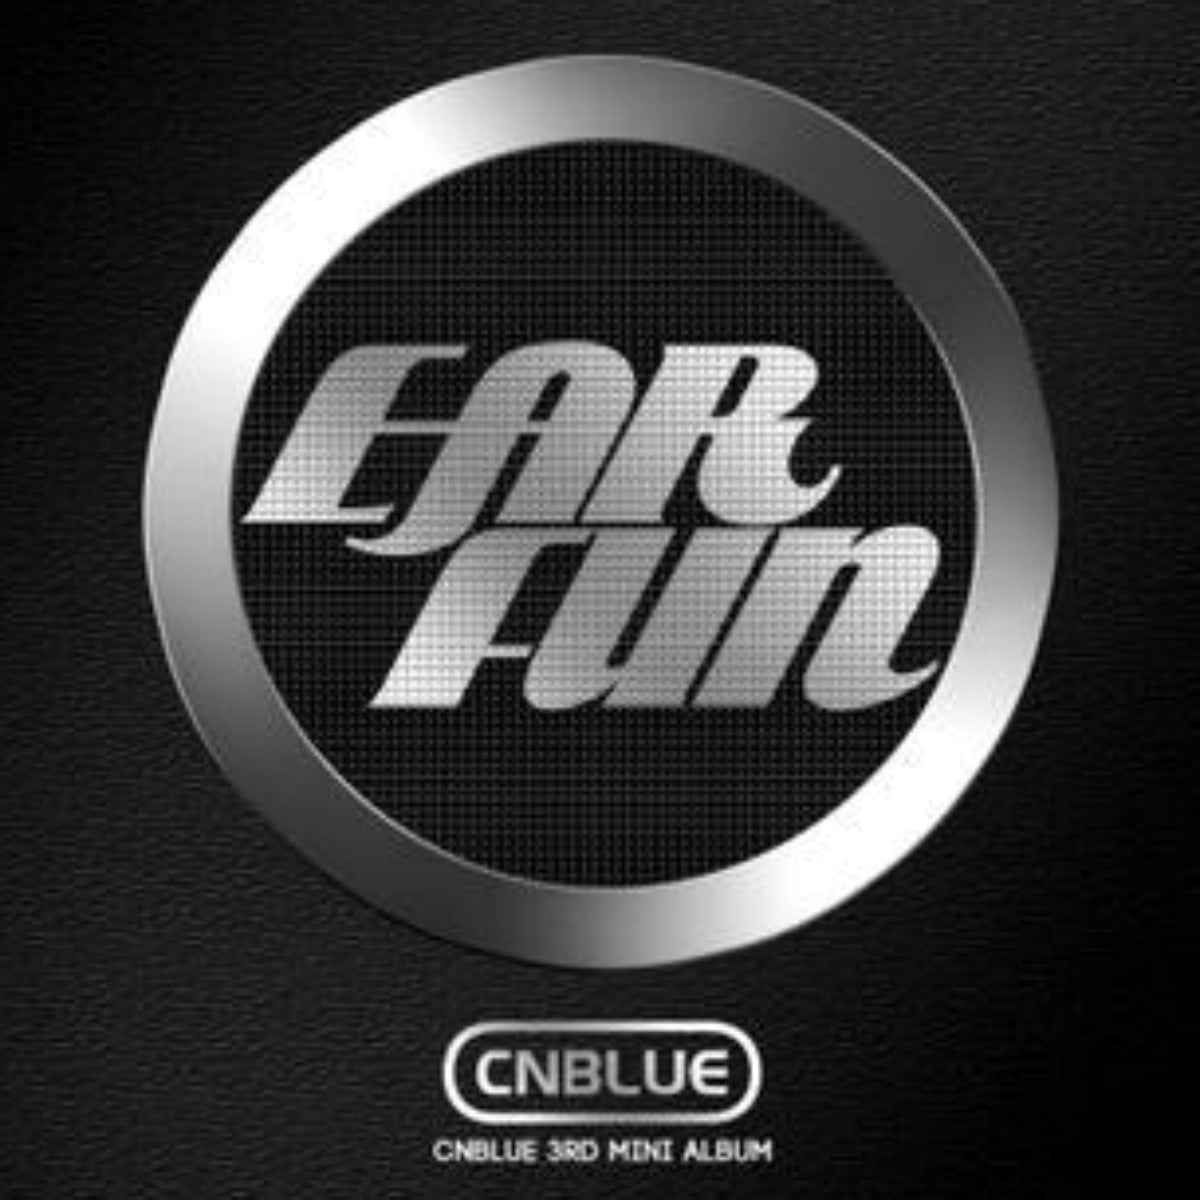 CNBLUE Mini Album Vol. 3 - Ear Fun (CD + DVD) (Taiwan Limited Edition)